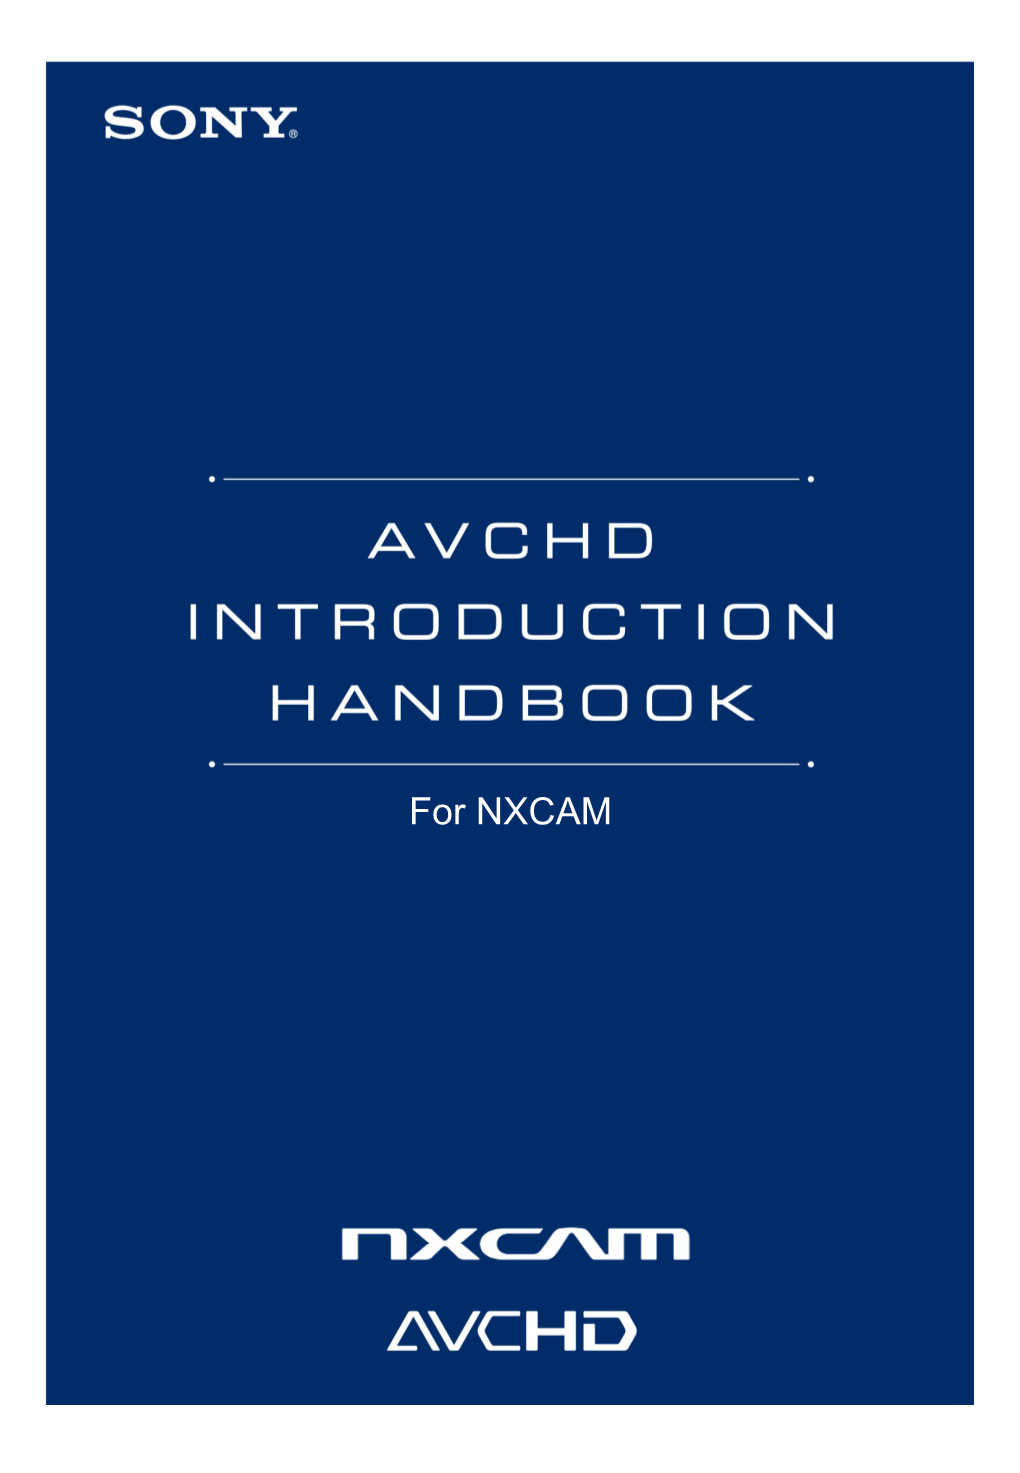 Avchd Introduction Handbook for B&I